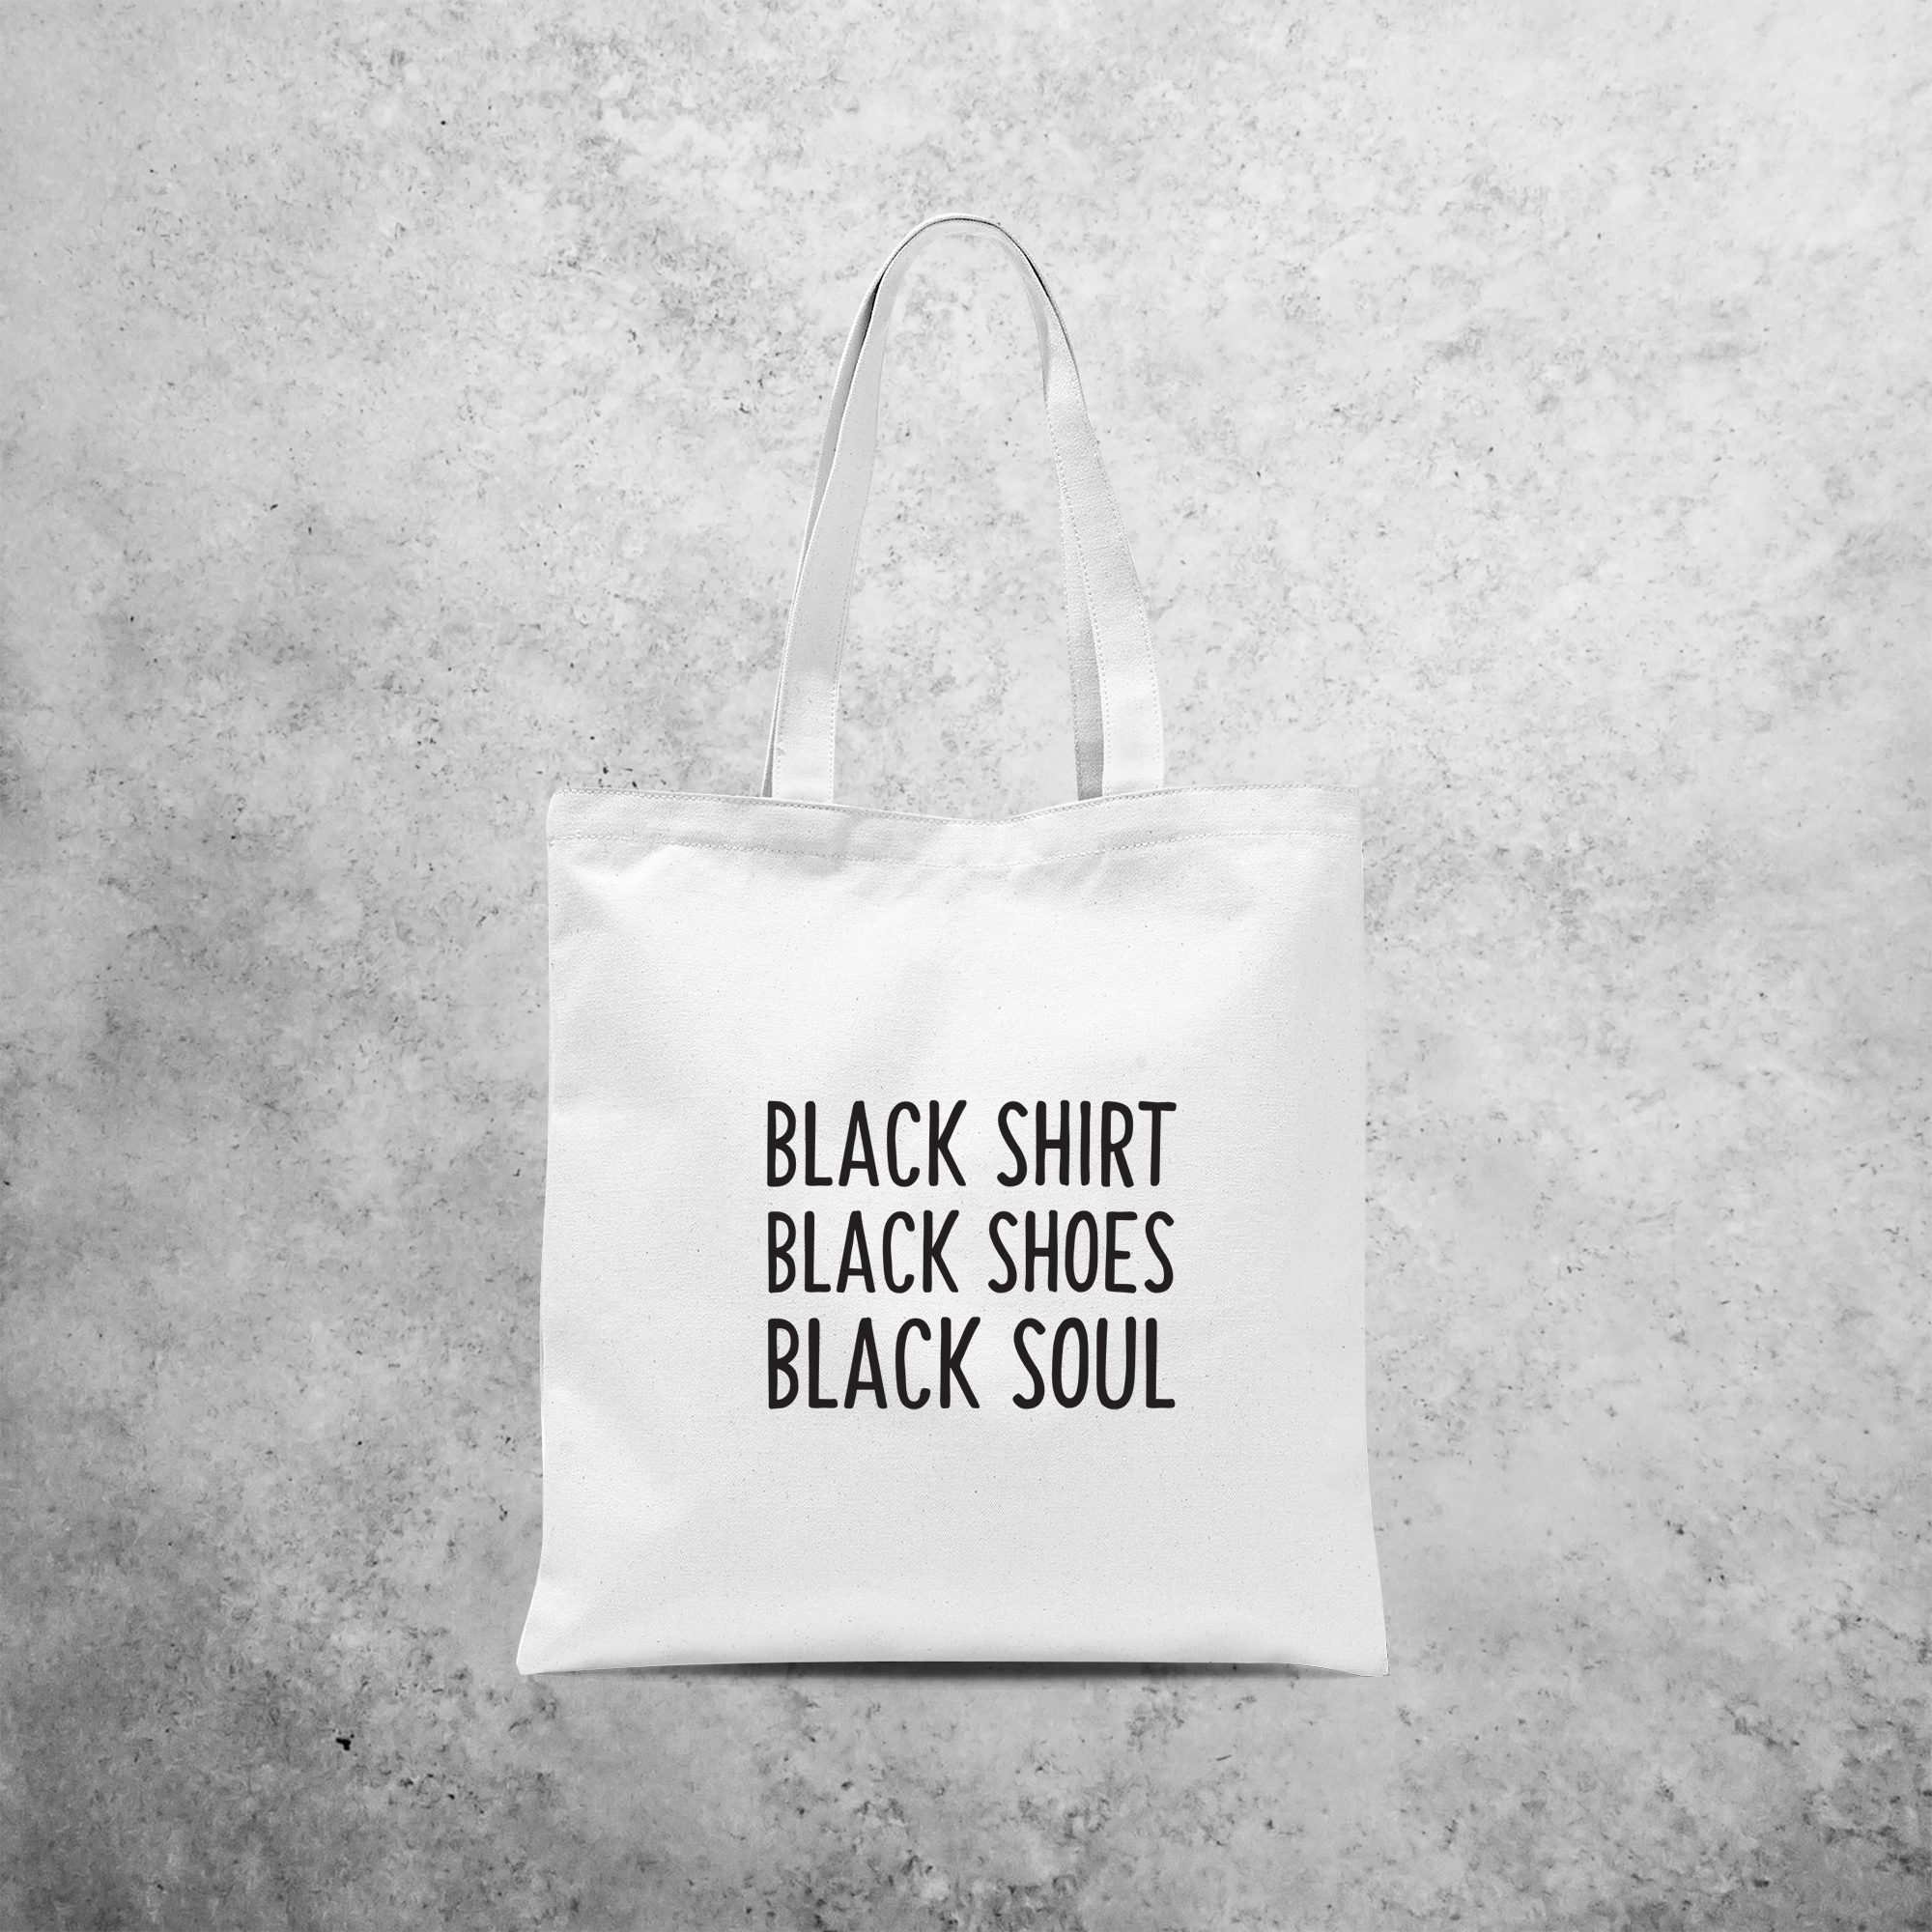 'Black shirt, Black shoes, Black soul' tote bag